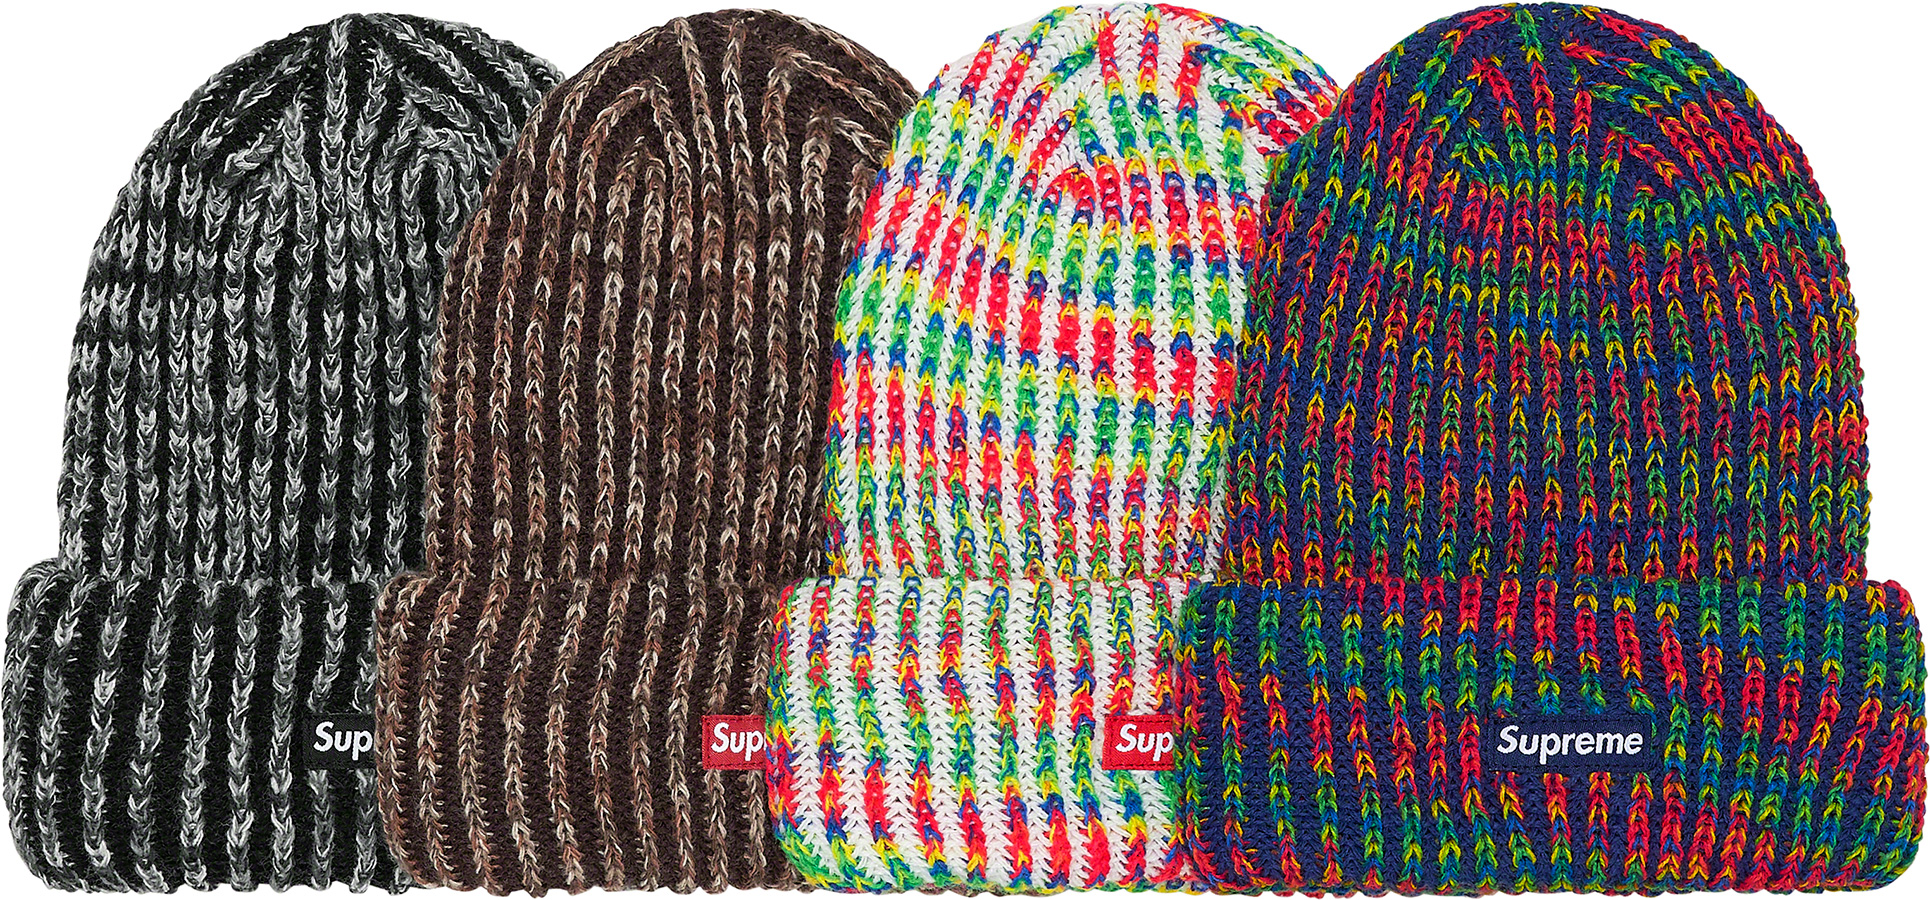 supreme Rainbow knit Loose Gauge beanie帽子